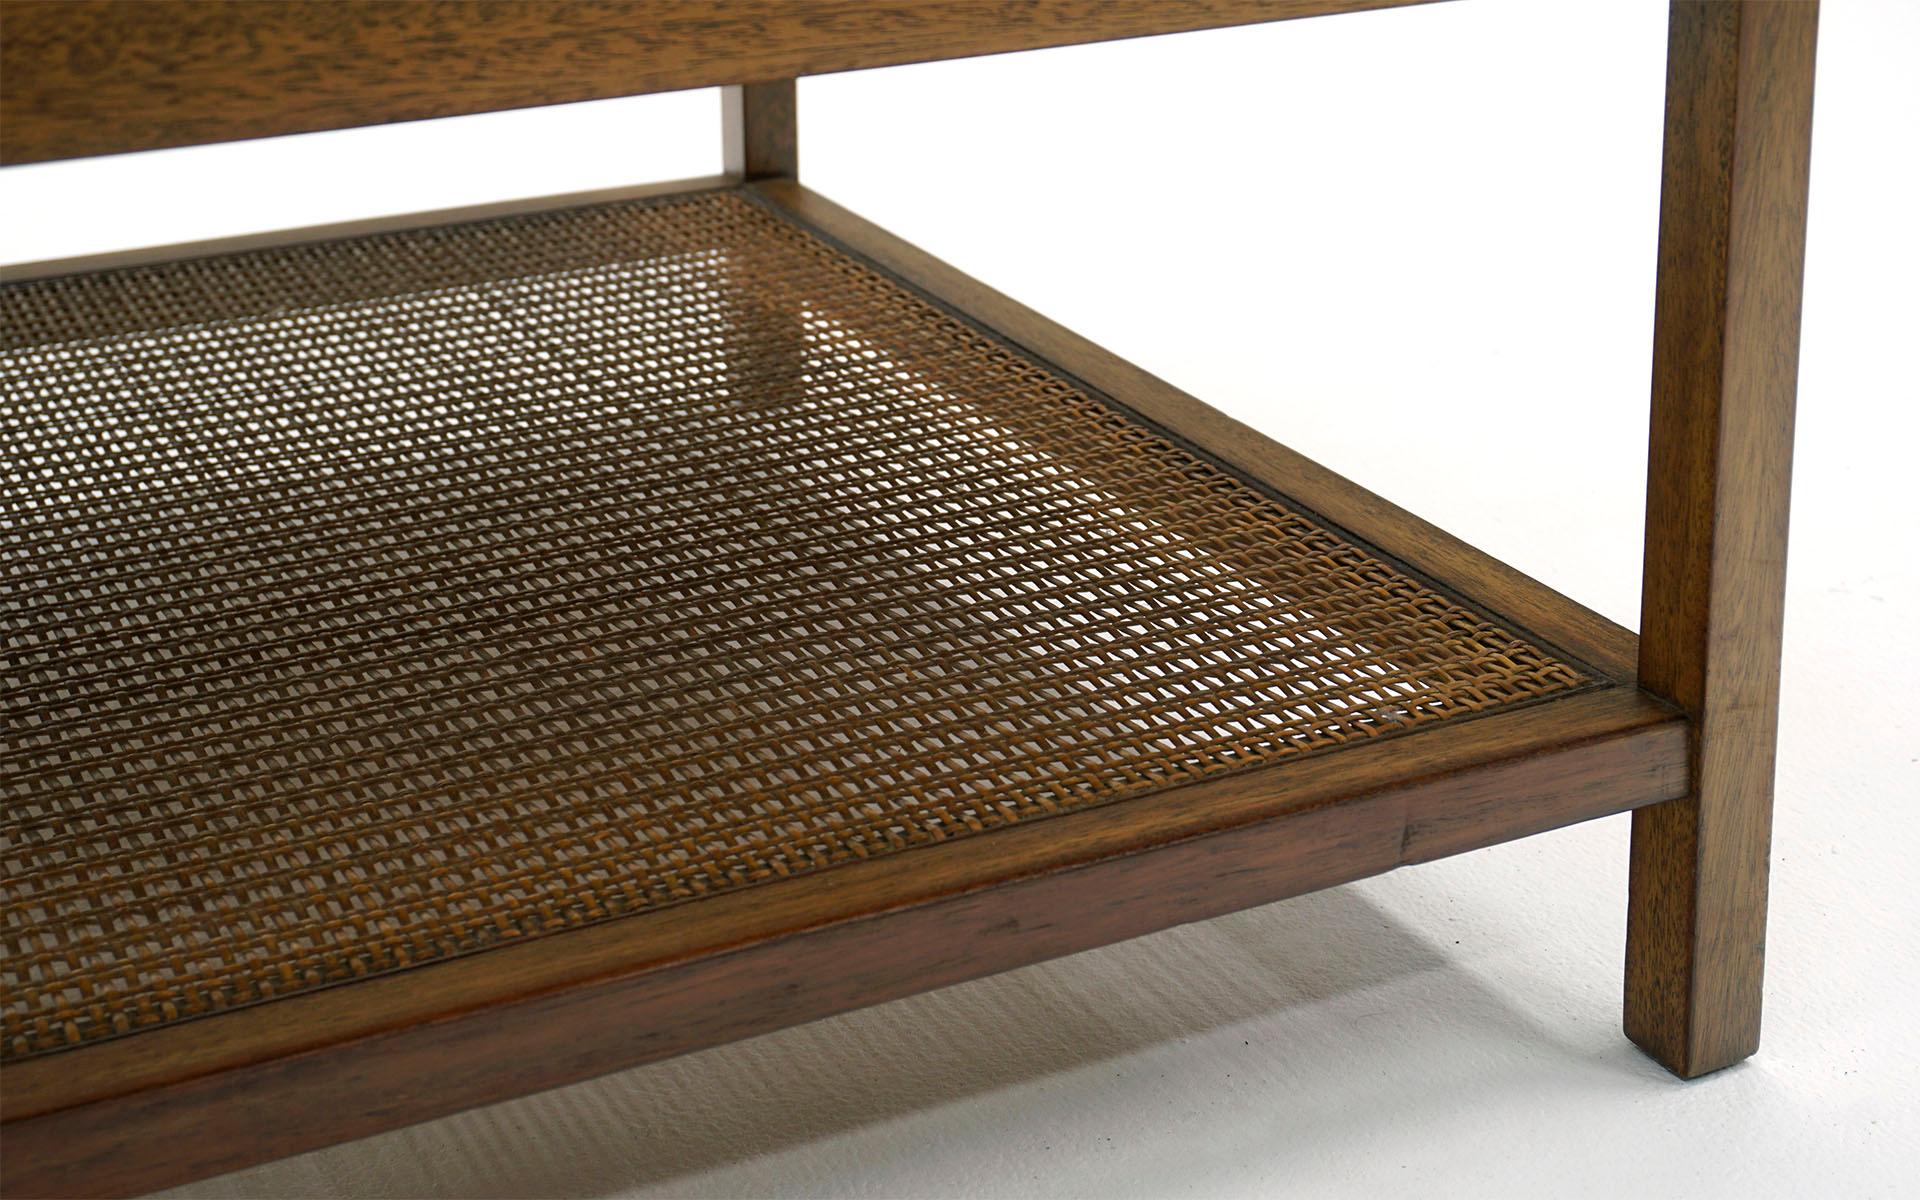 Brass Paul McCobb Side Table / Nightstand, Two Drawers, Cane Shelf, Original Pulls